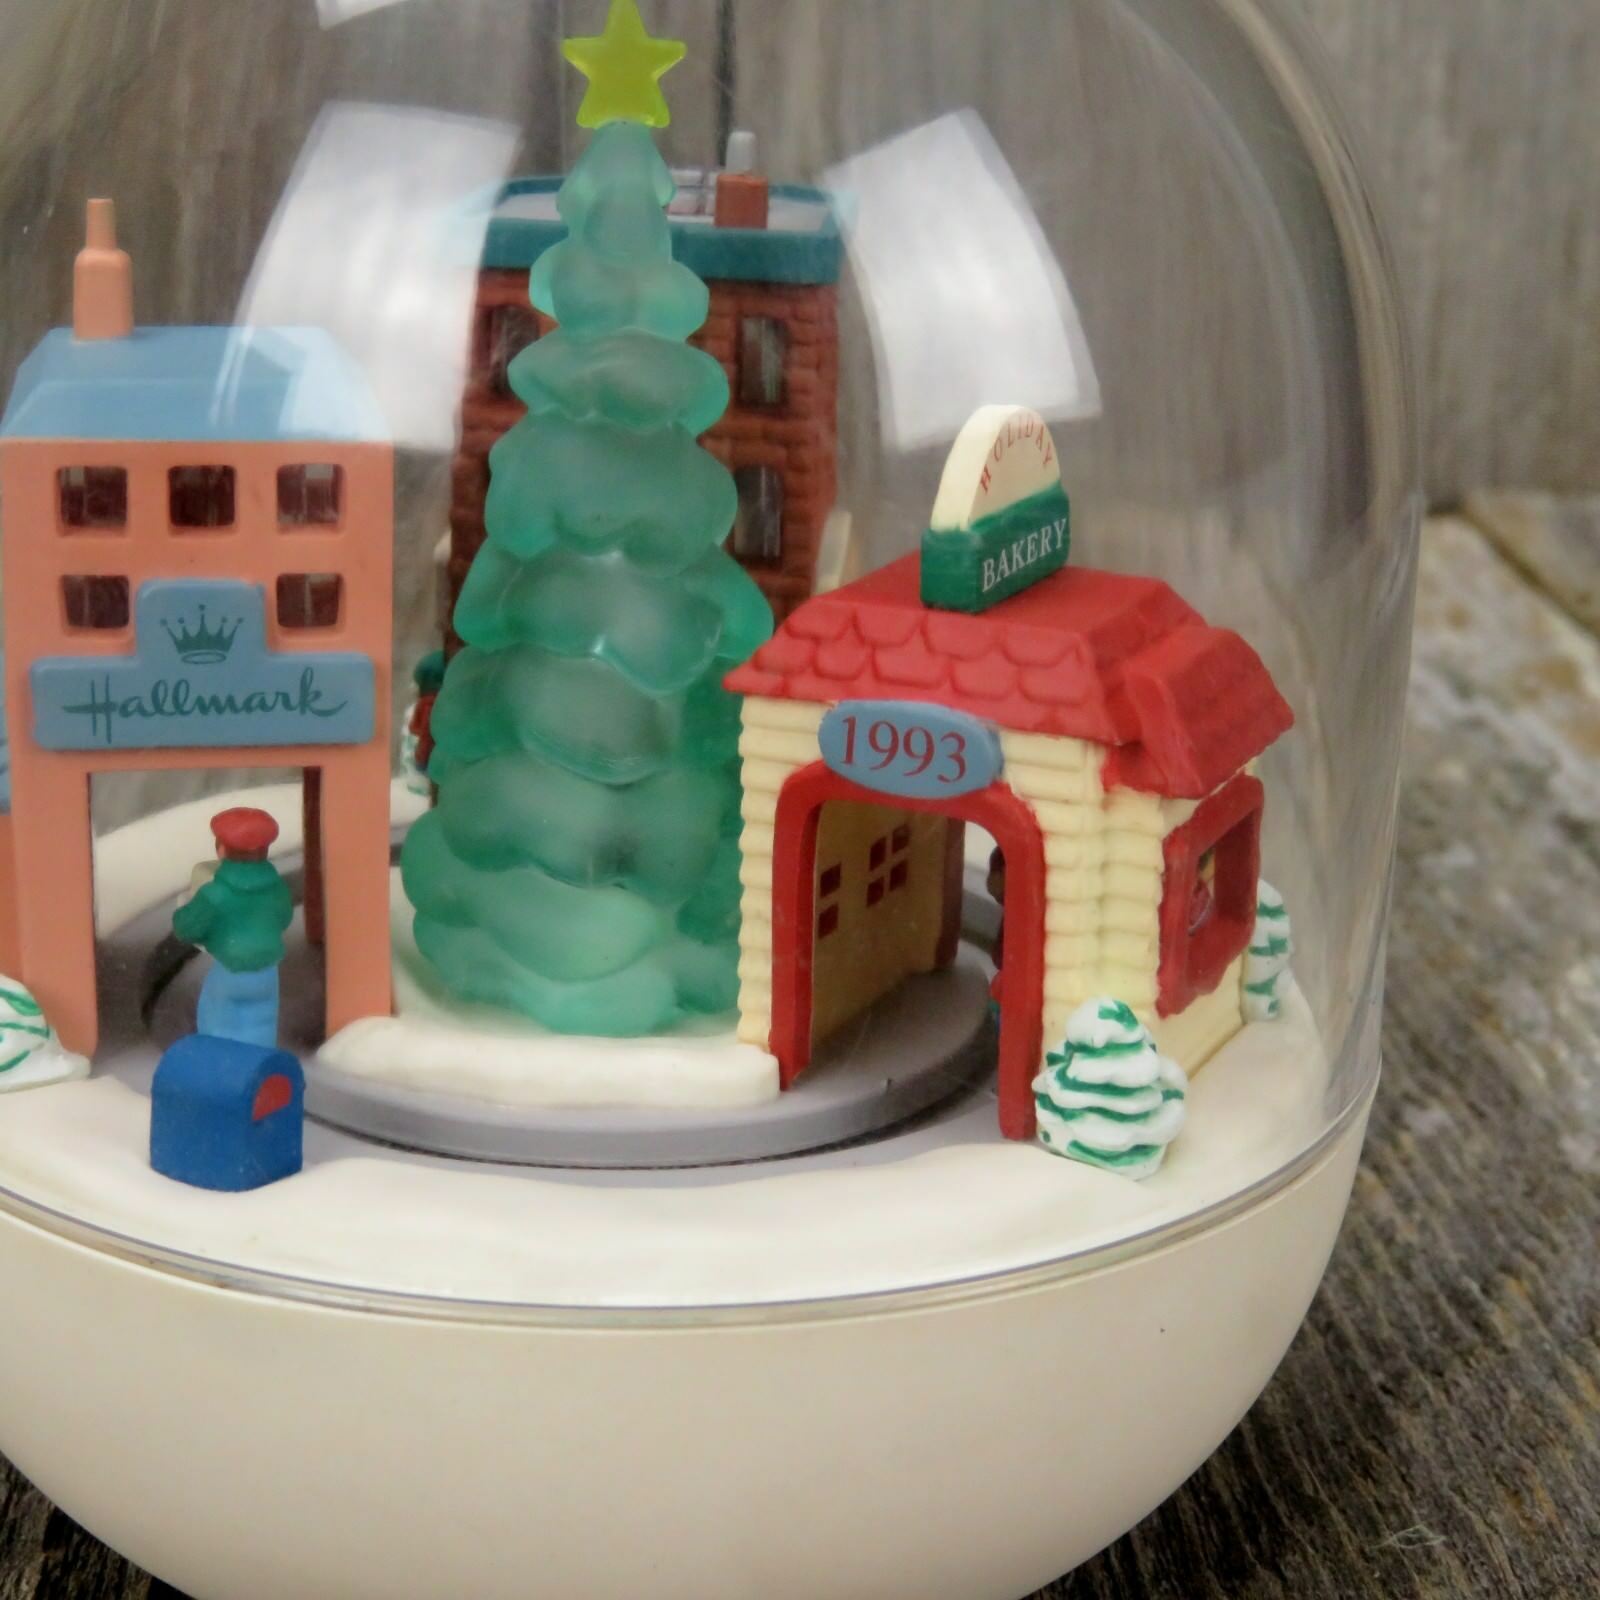 Last Minute Shopping Ornament Hallmark Kringle Town Christmas Magic Light VIDEO - At Grandma's Table